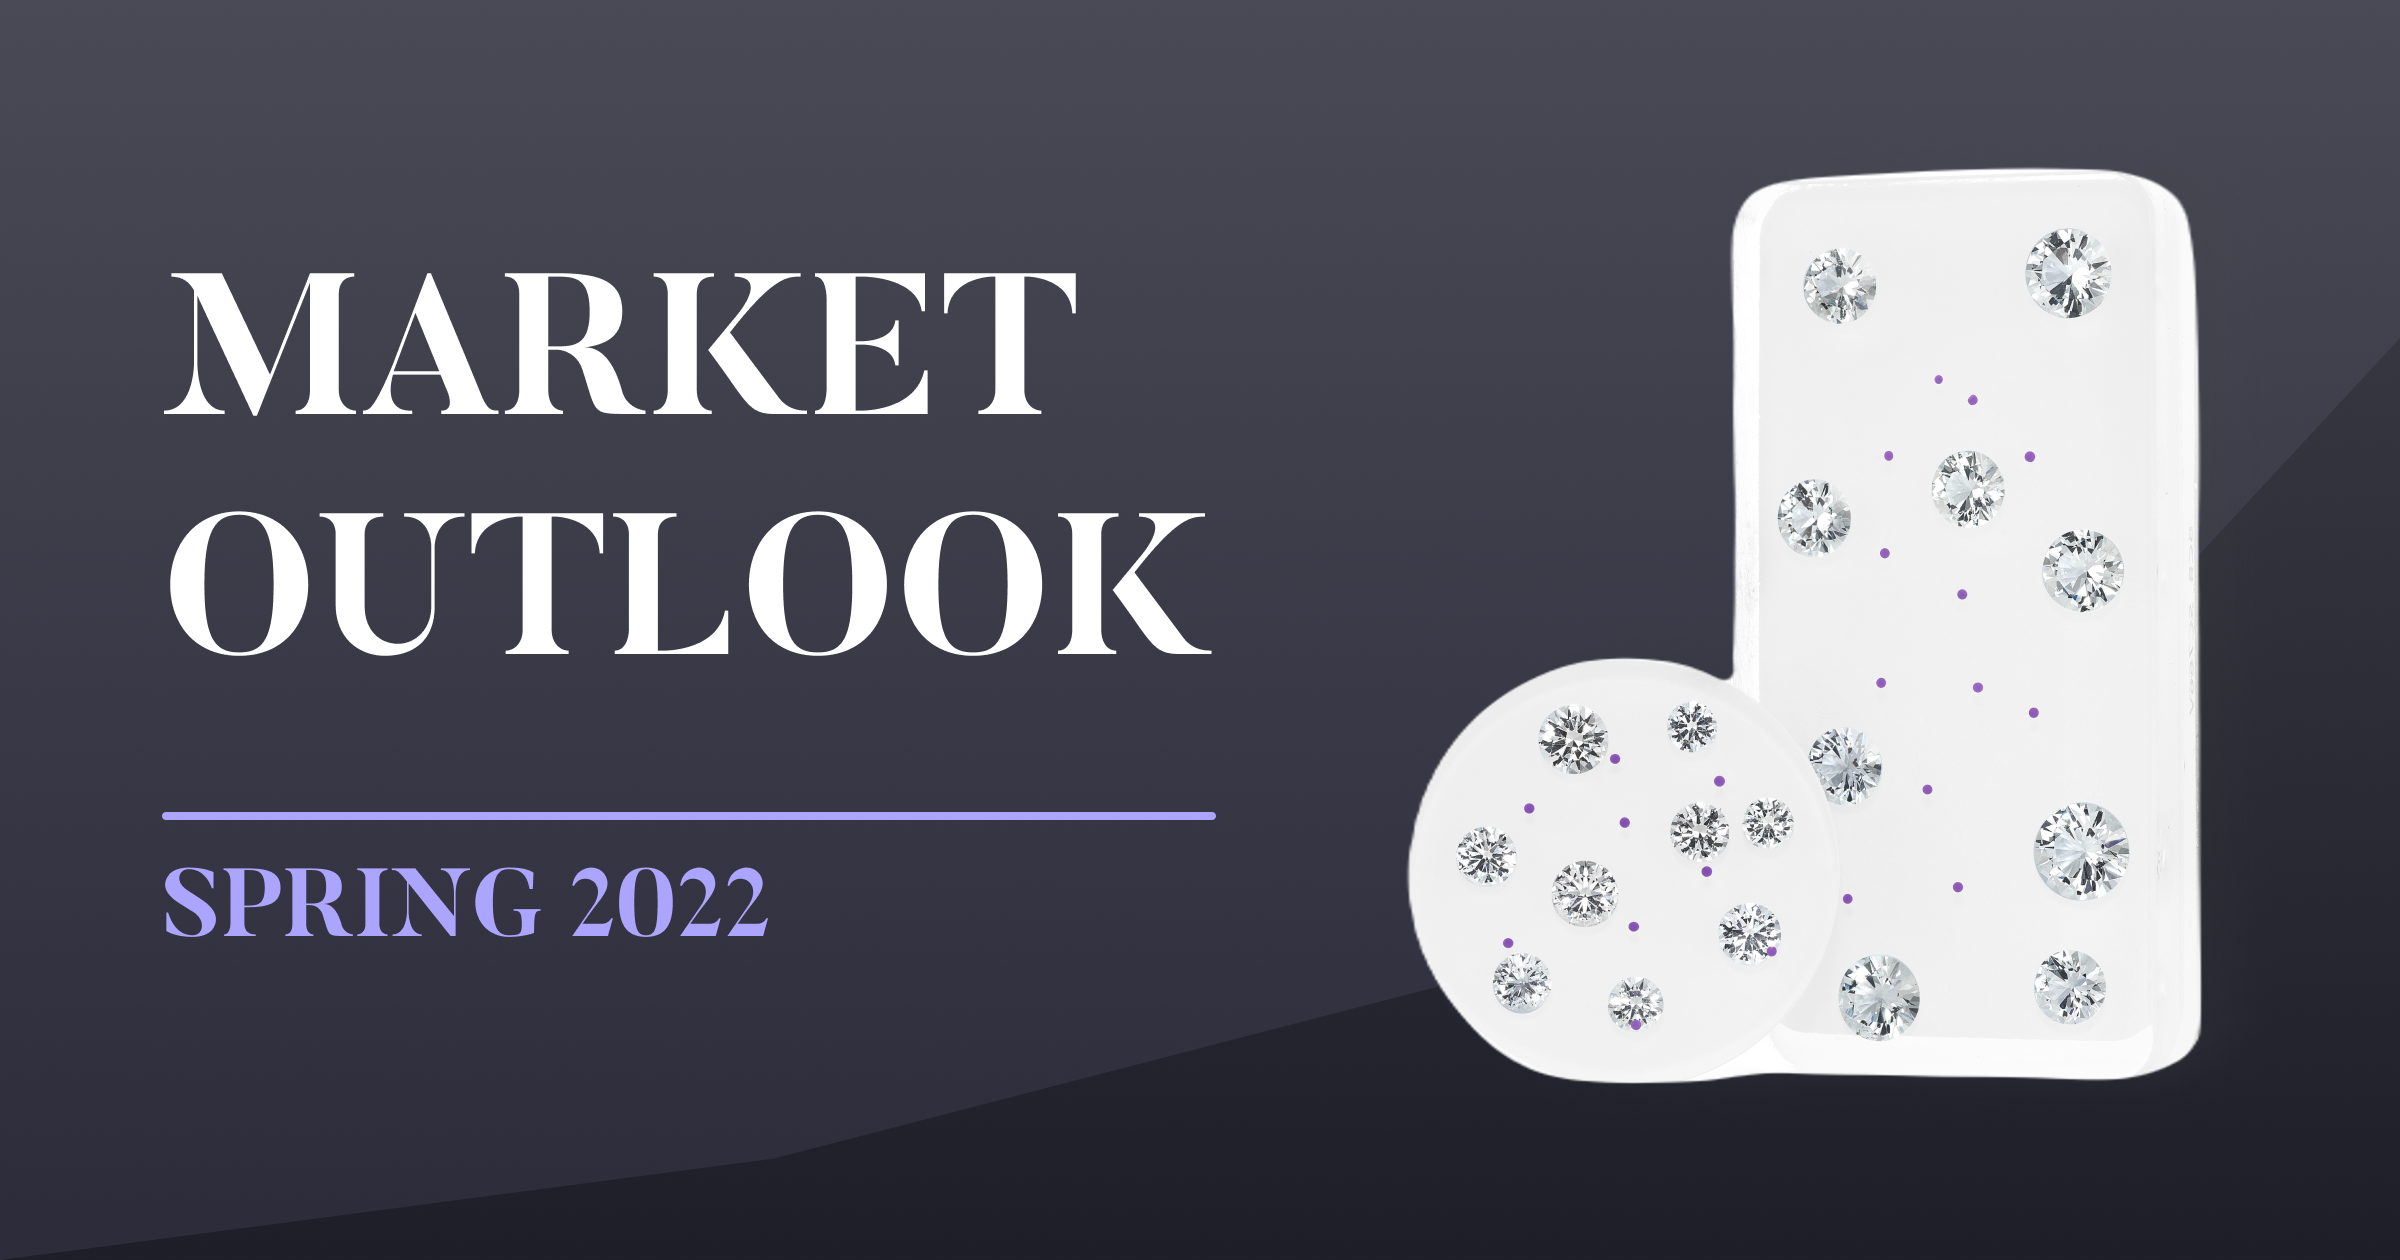 Diamond Standard's Market Outlook: Spring 2022